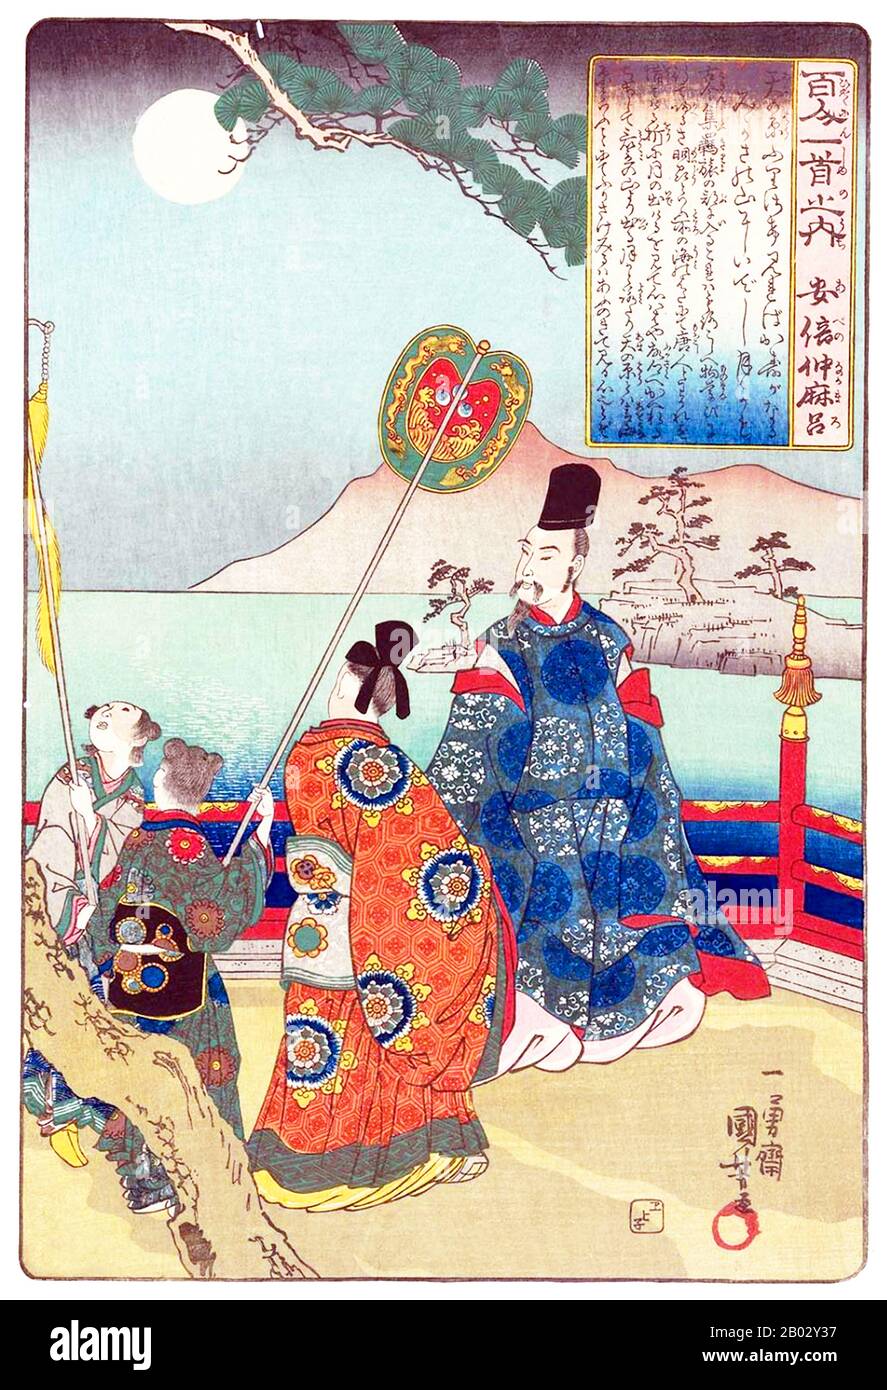 Su Renshan, The Immortal Li Tieguai, China, Qing dynasty (1644–1911)